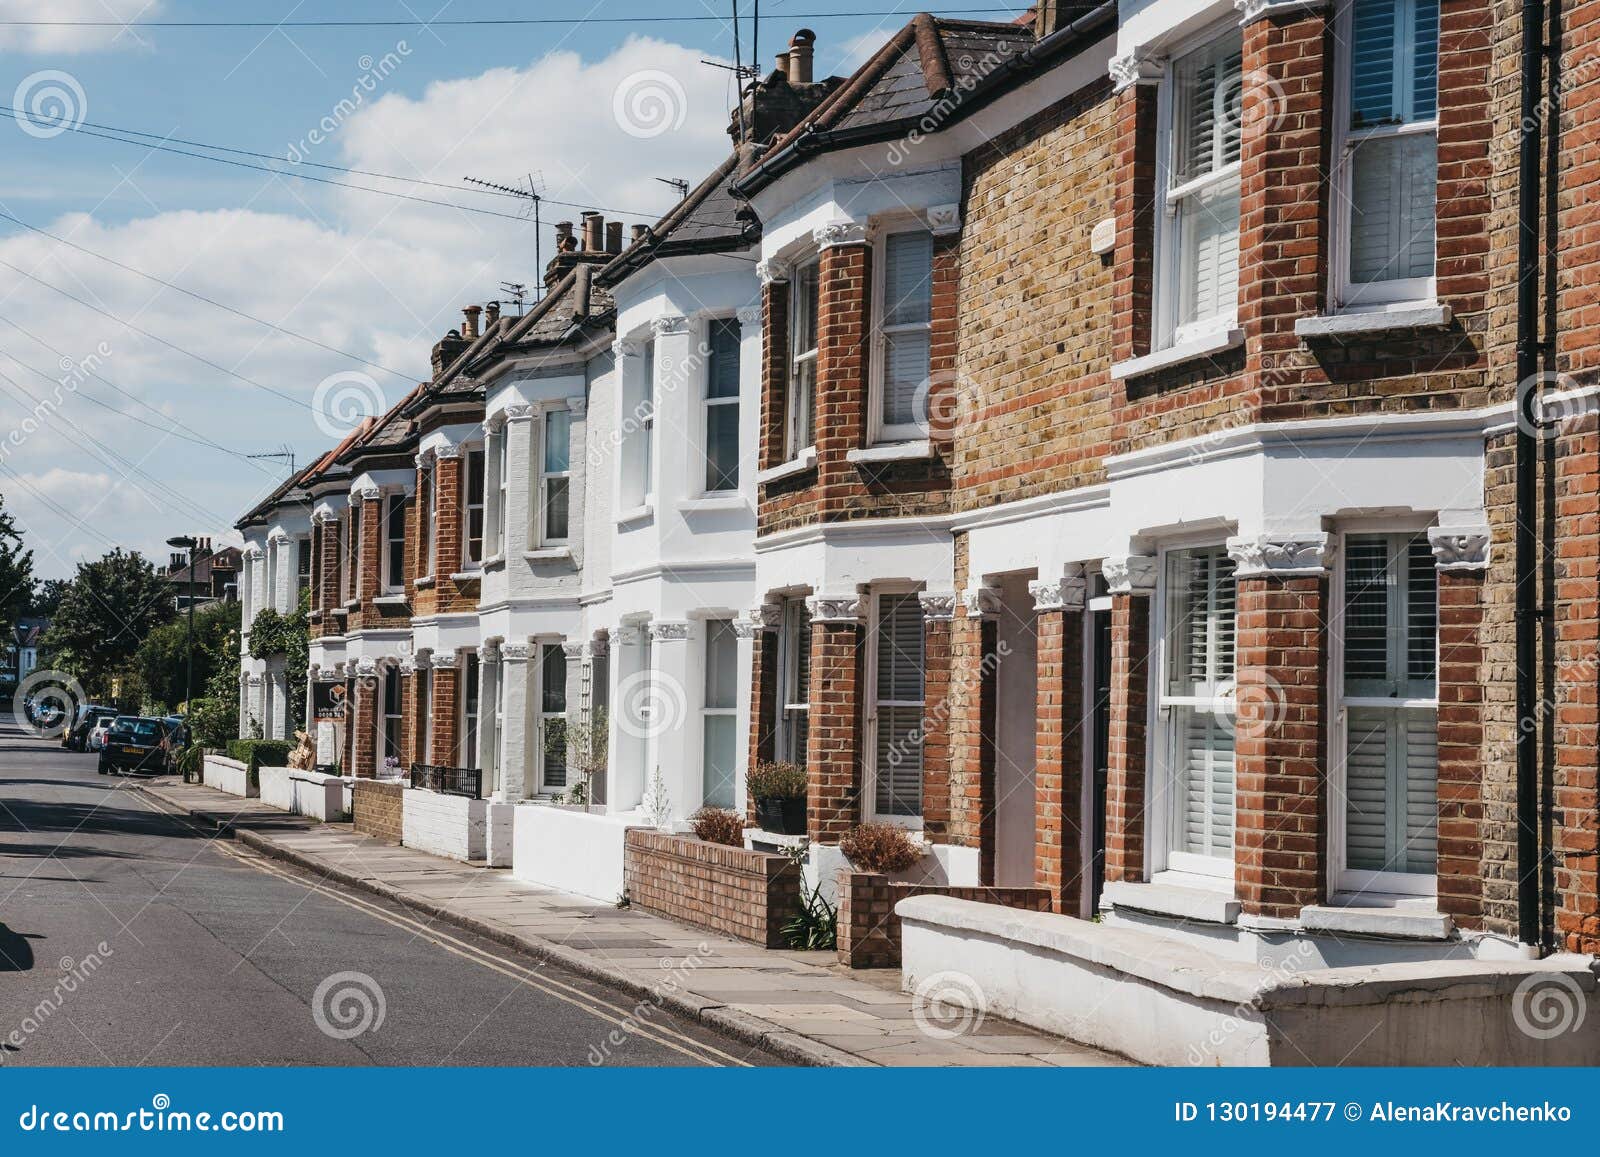 Terraced houses in the United Kingdom - Wikipedia